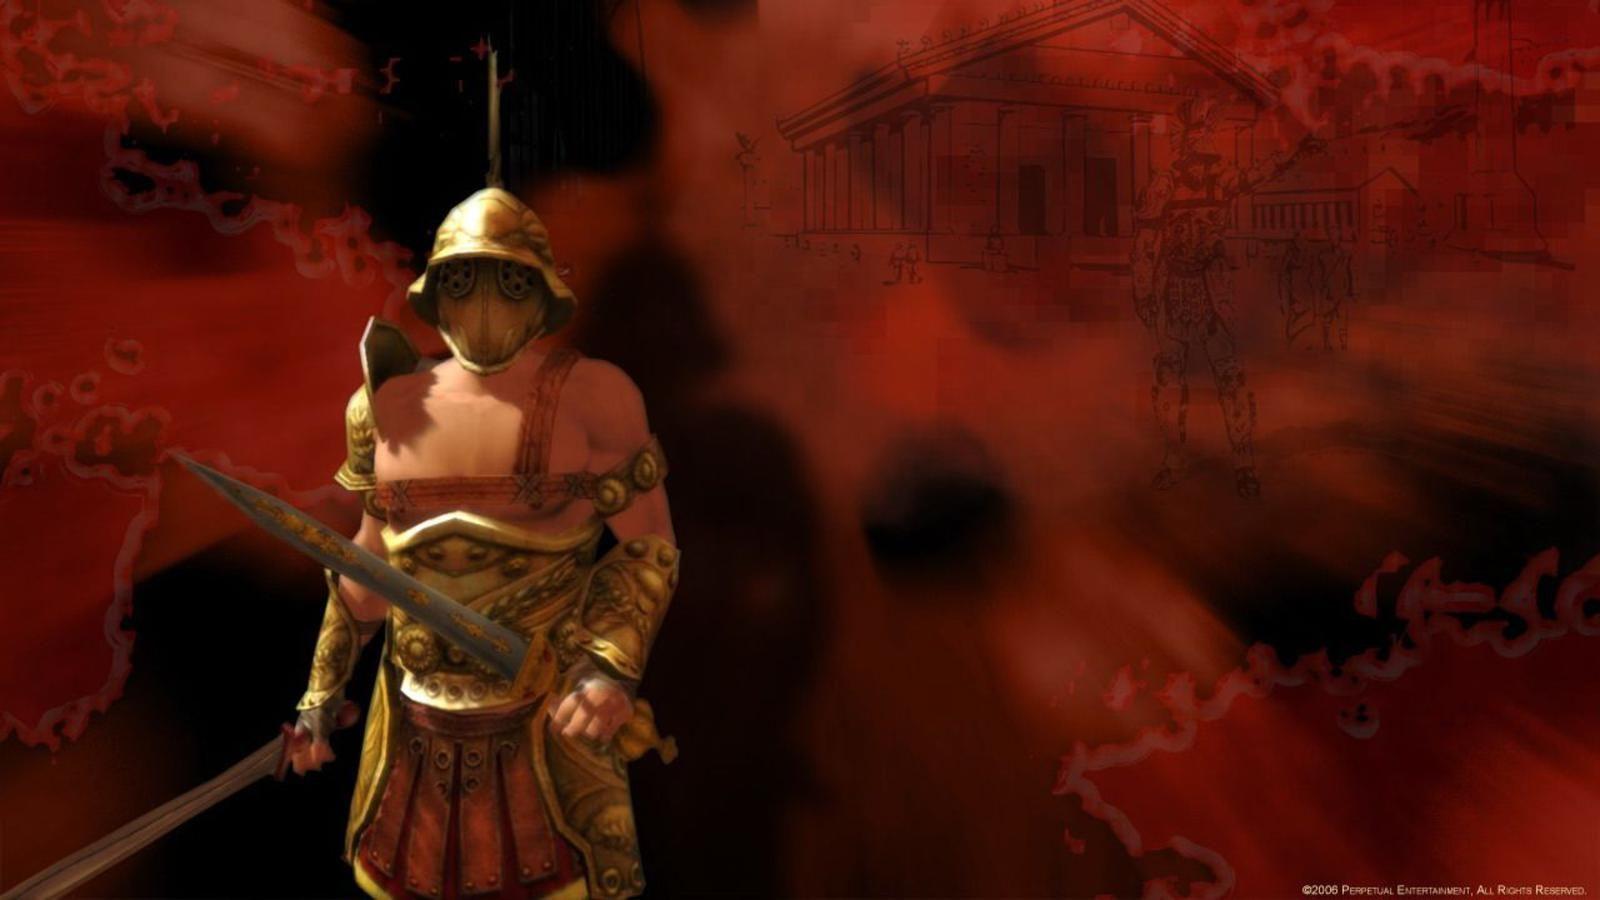 Gladiator [Red] 1600x900 Wallpaper, 1600x900 Wallpaper